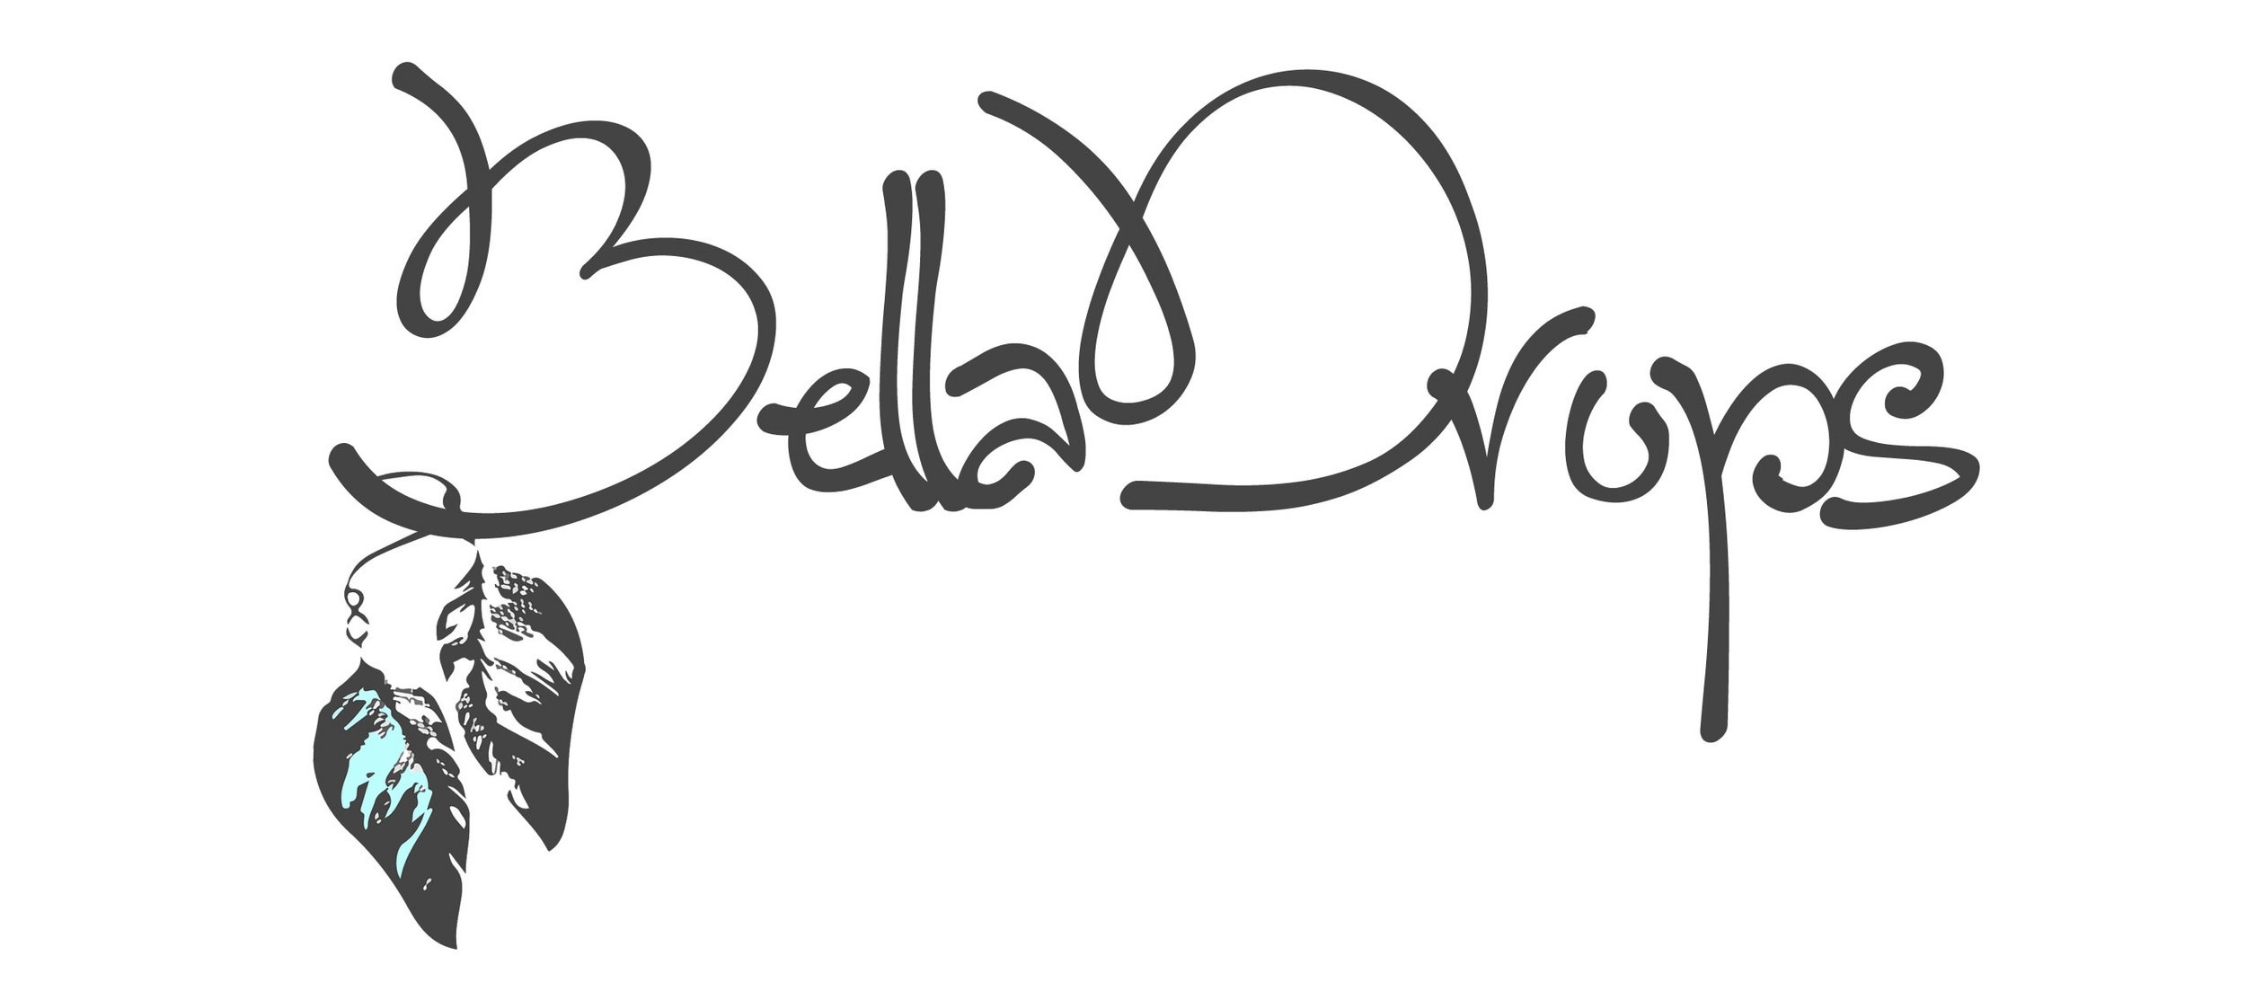 BellaDrops